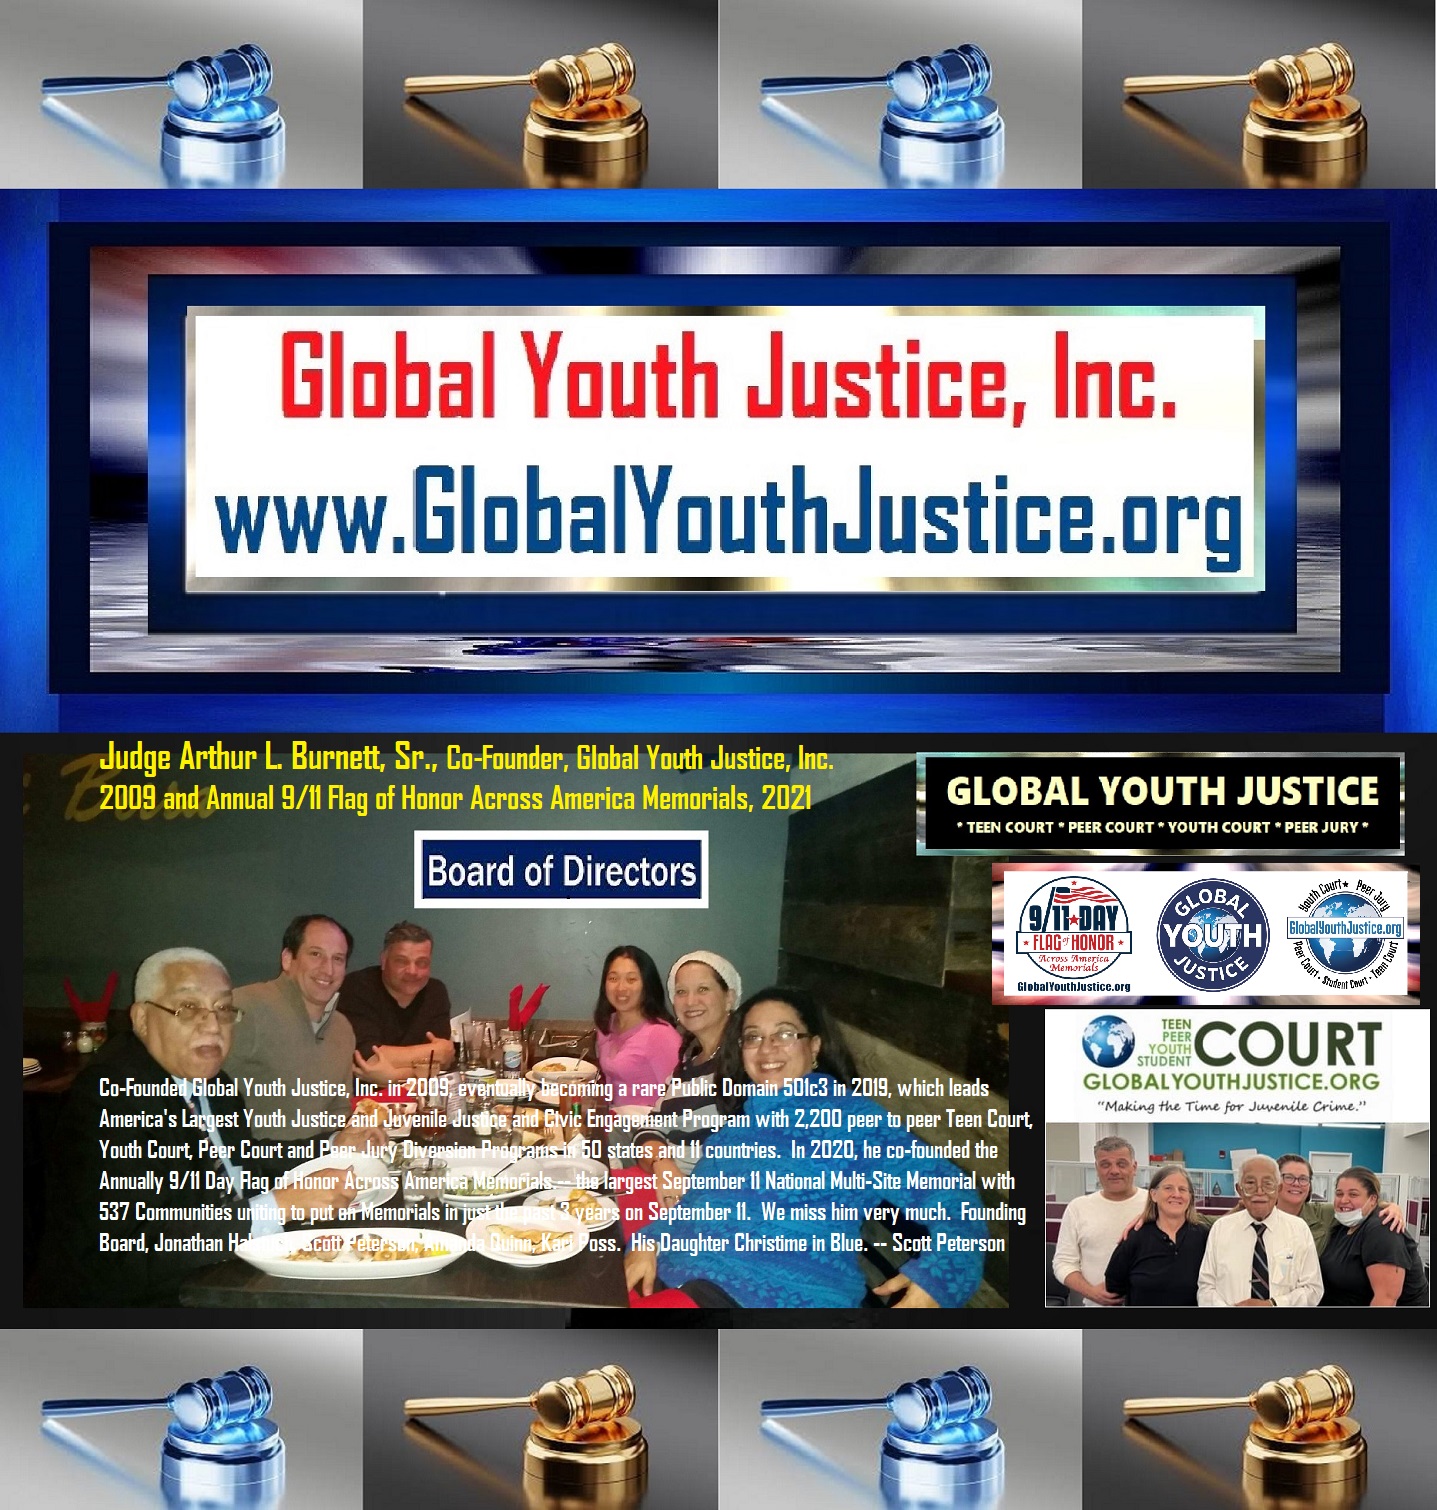 Judge Arthur L. Burnett, Sr. Co-Founder Global Youth Justice